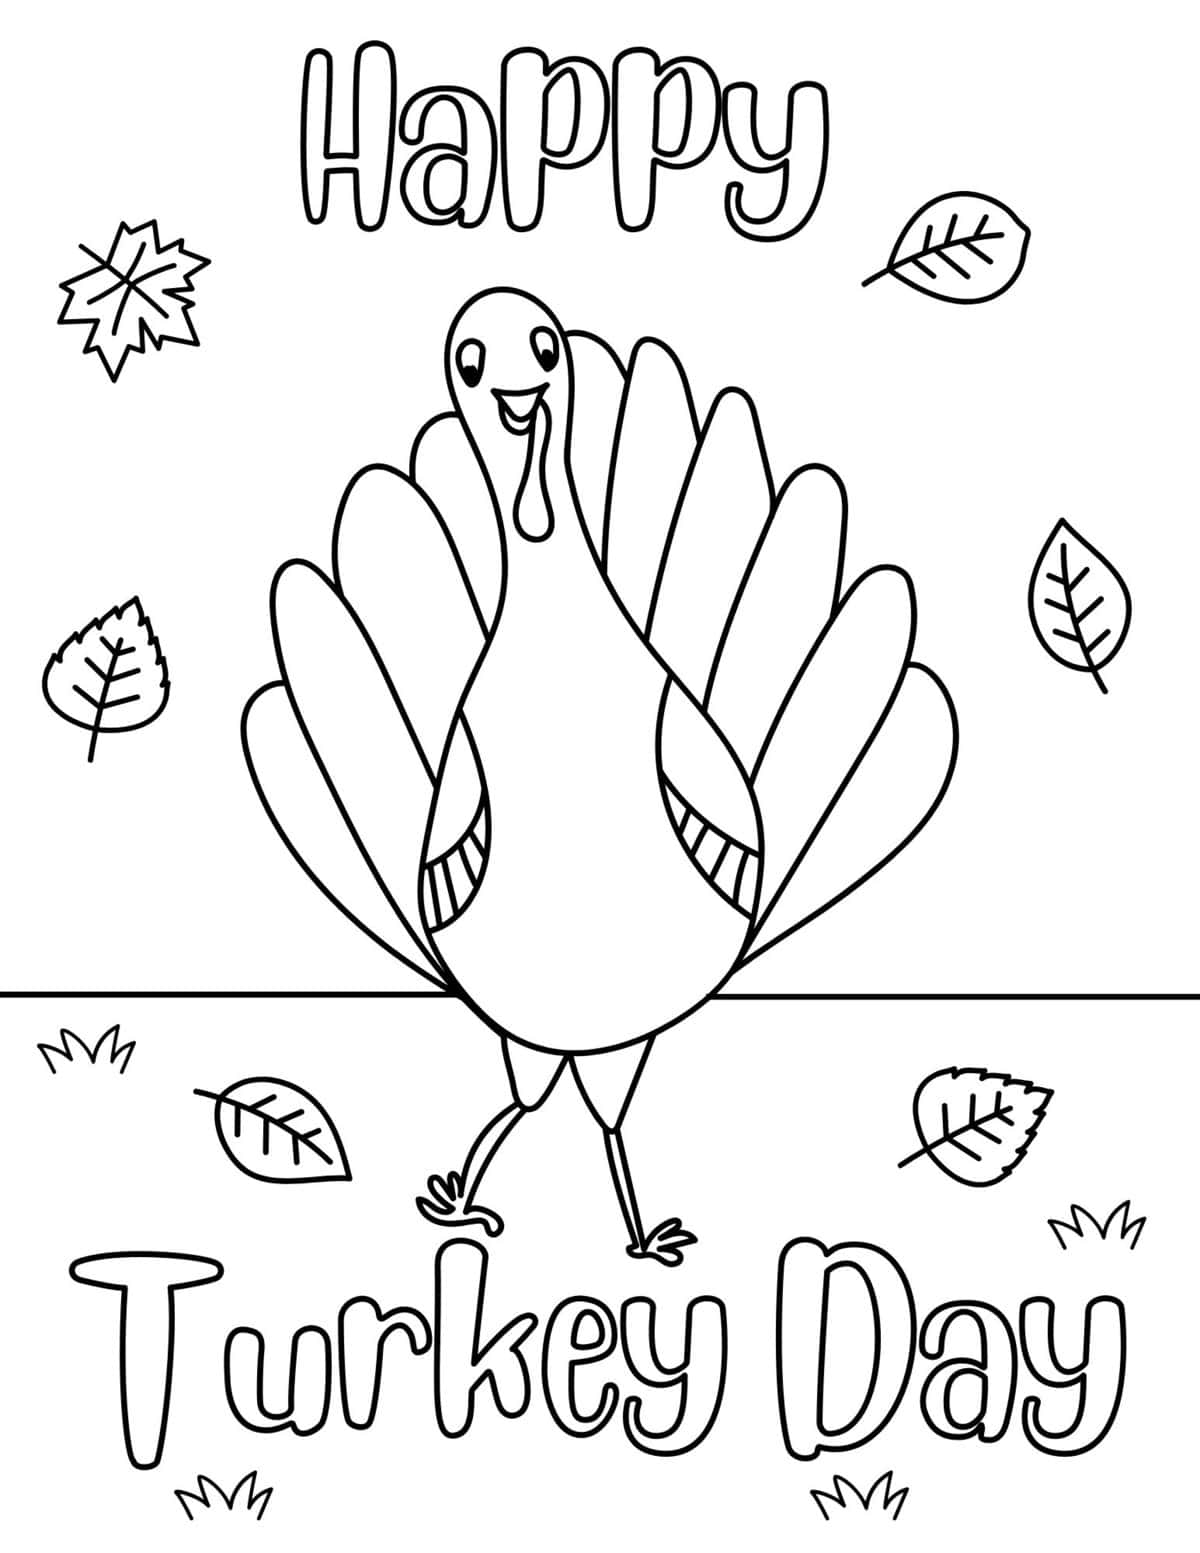 happy turkey day coloring sheet with a cartoon turkey